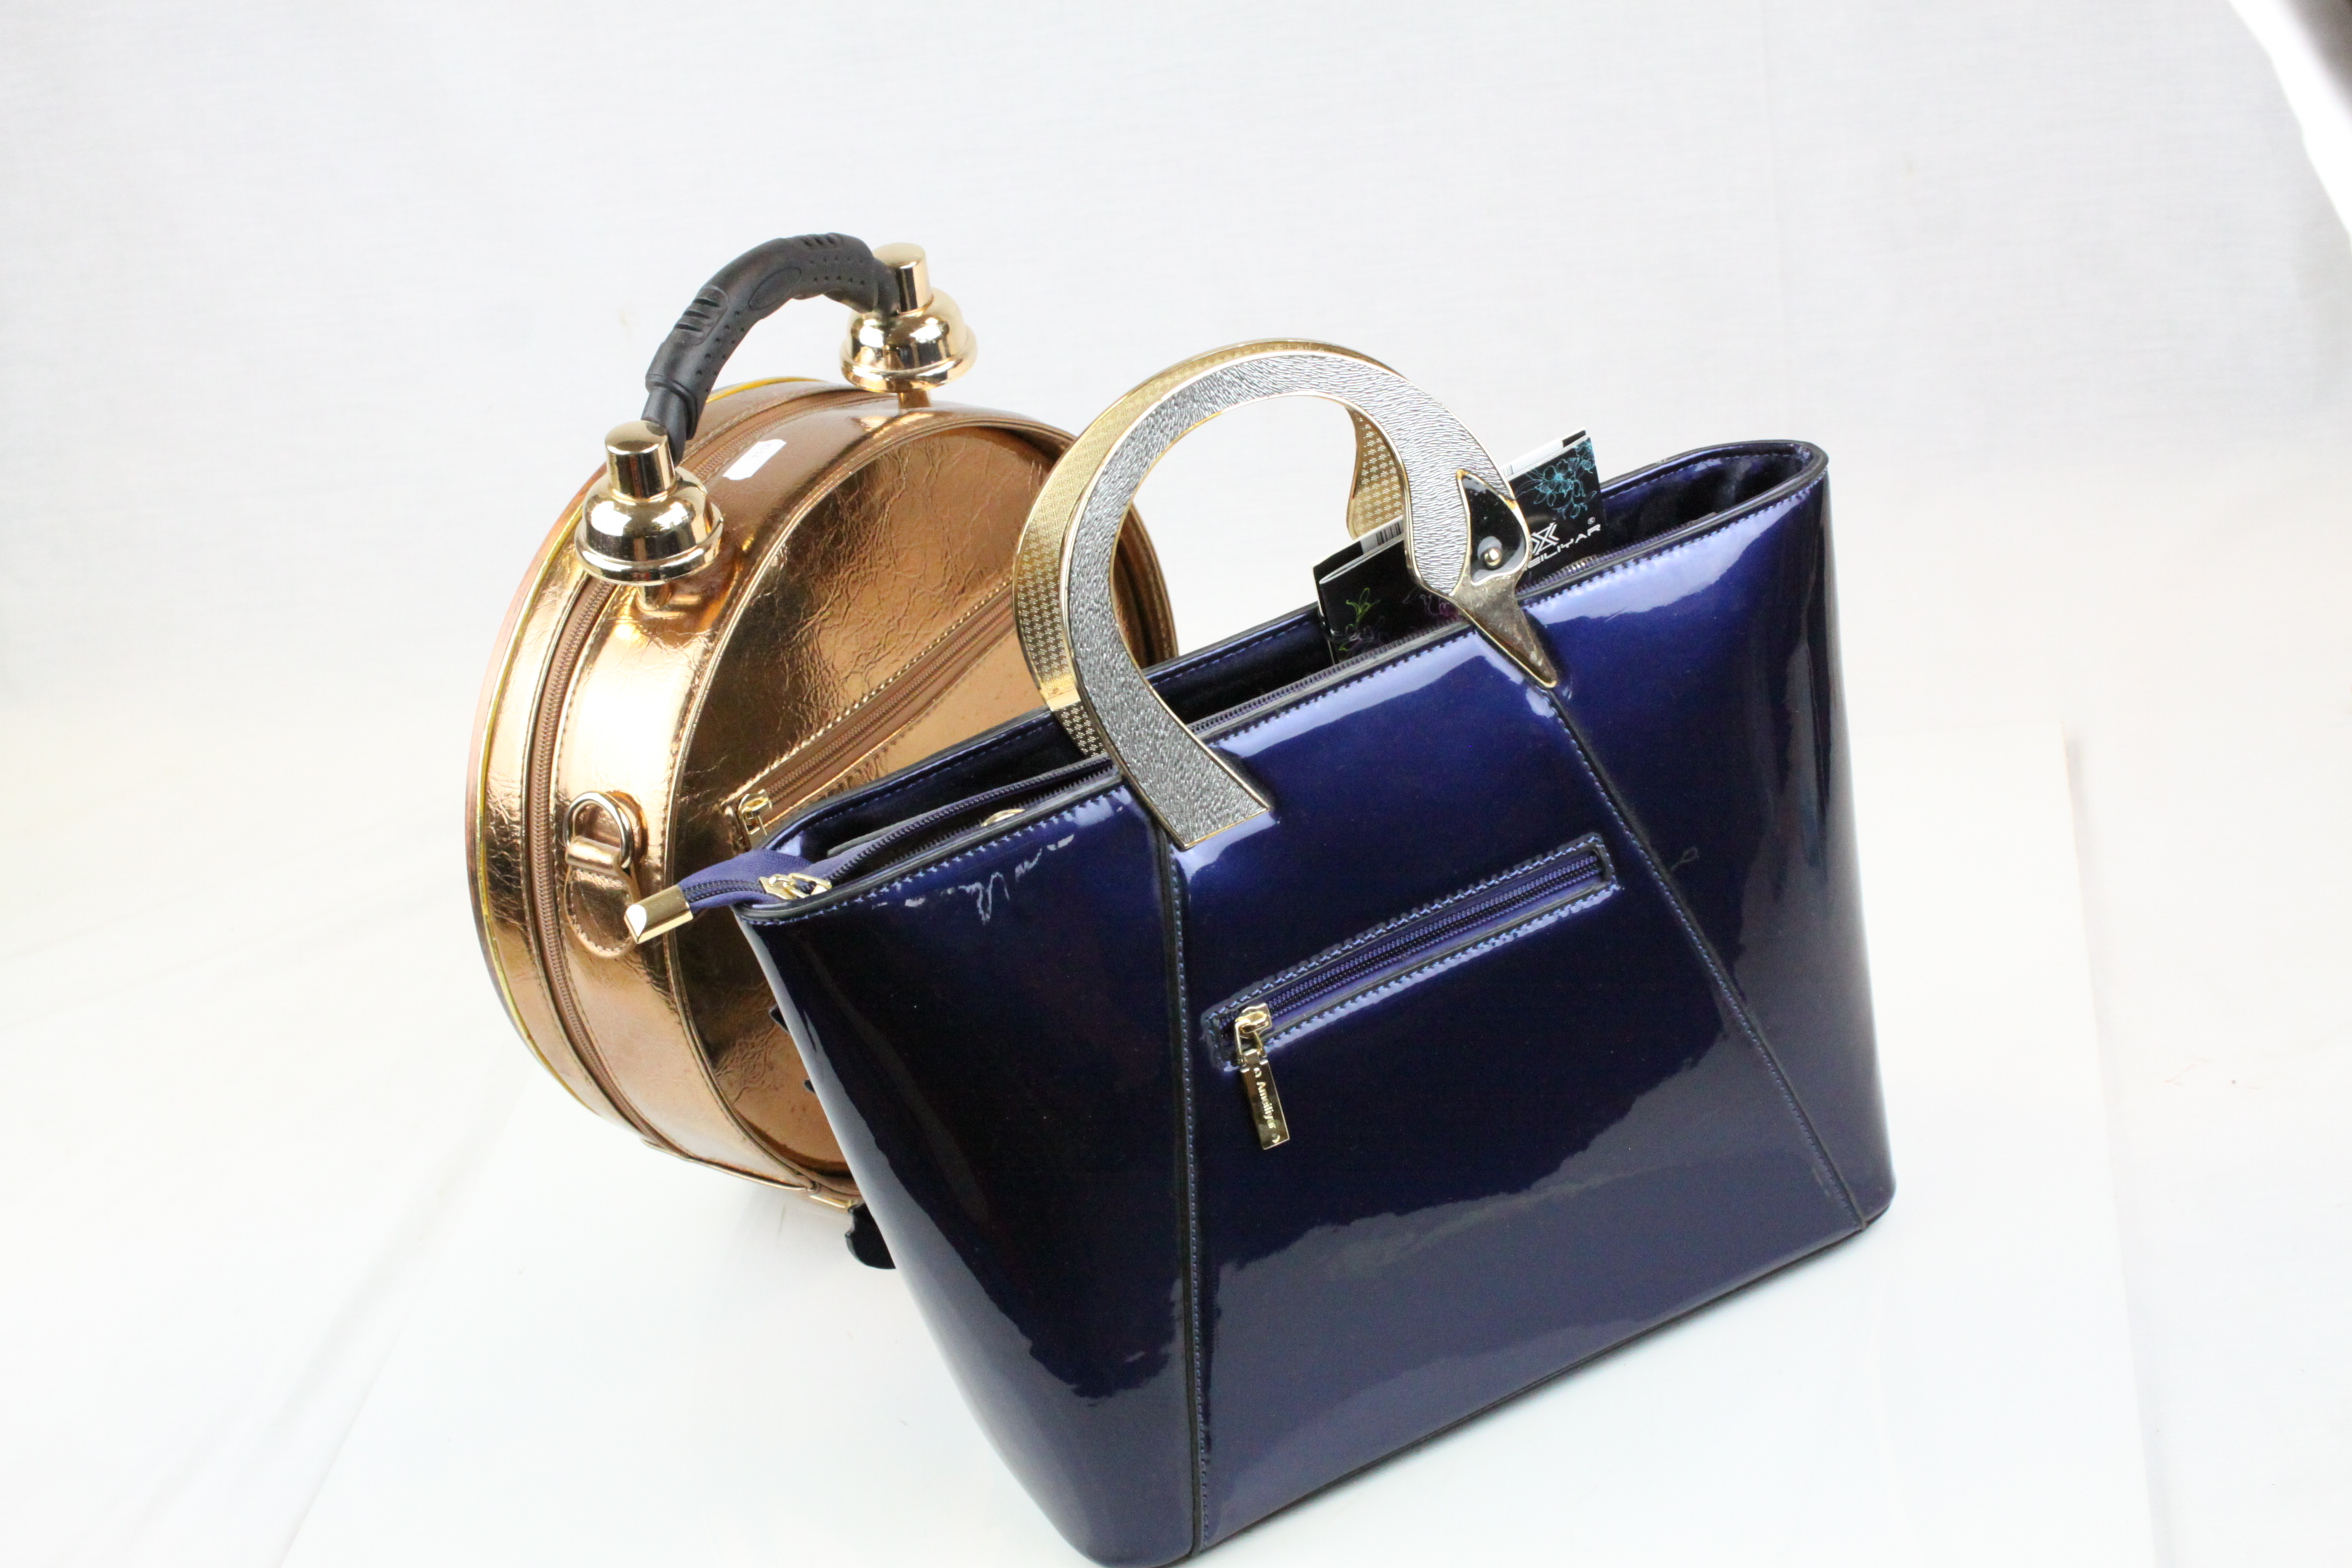 Two Handbags - Ameiliyar Swan Handbag, 36cms wide together with a Battery Operated Clock Handbag, - Image 5 of 5